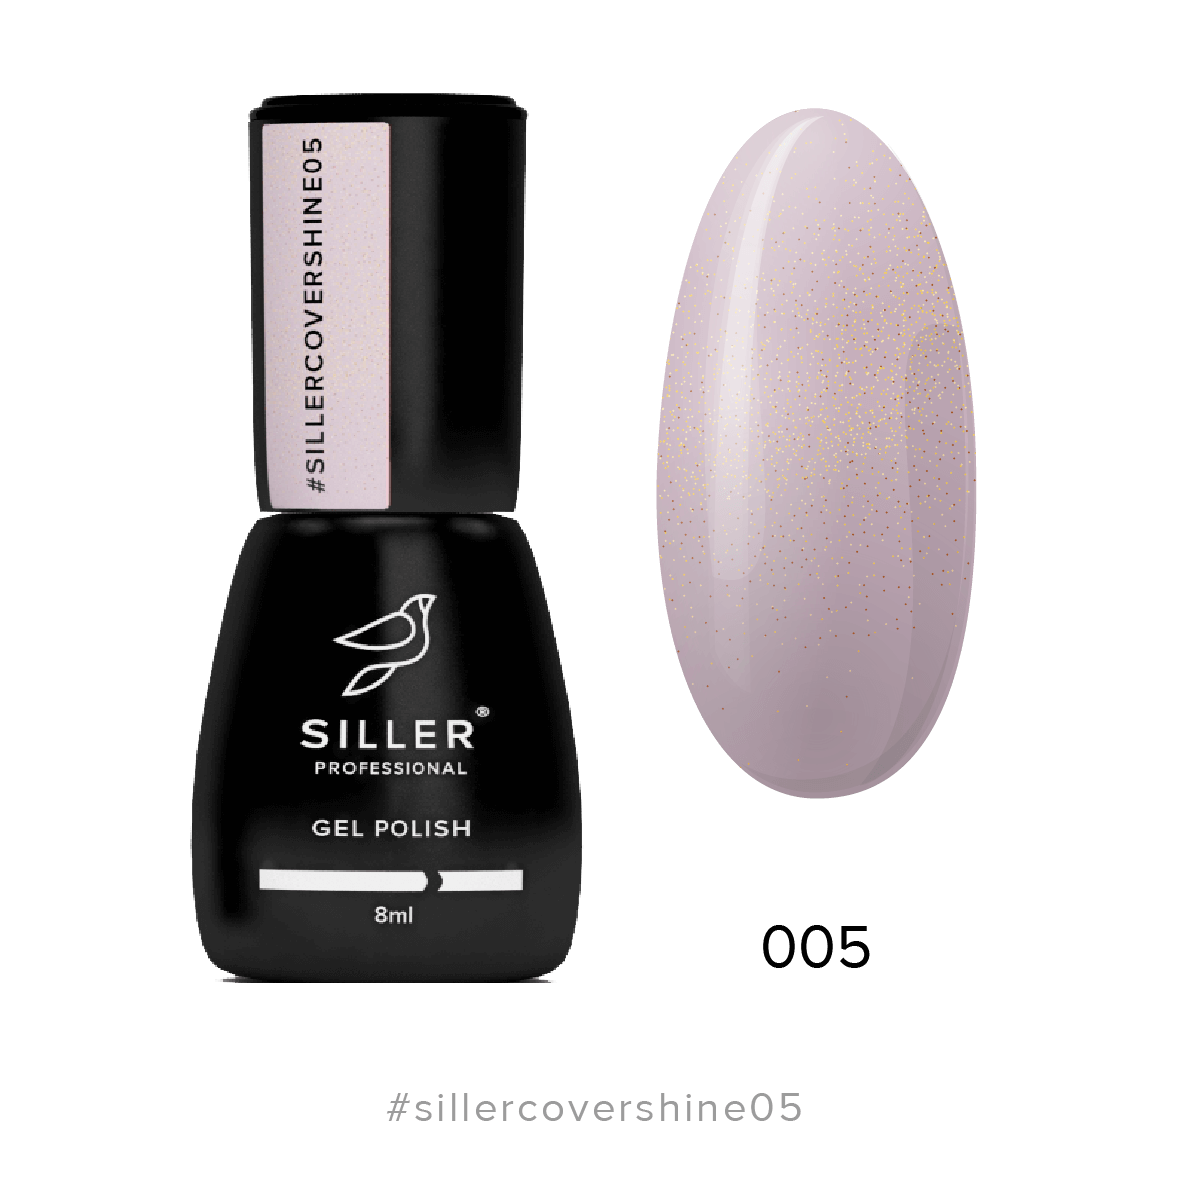 Siller Cover Base Shine #5 - Light Pink